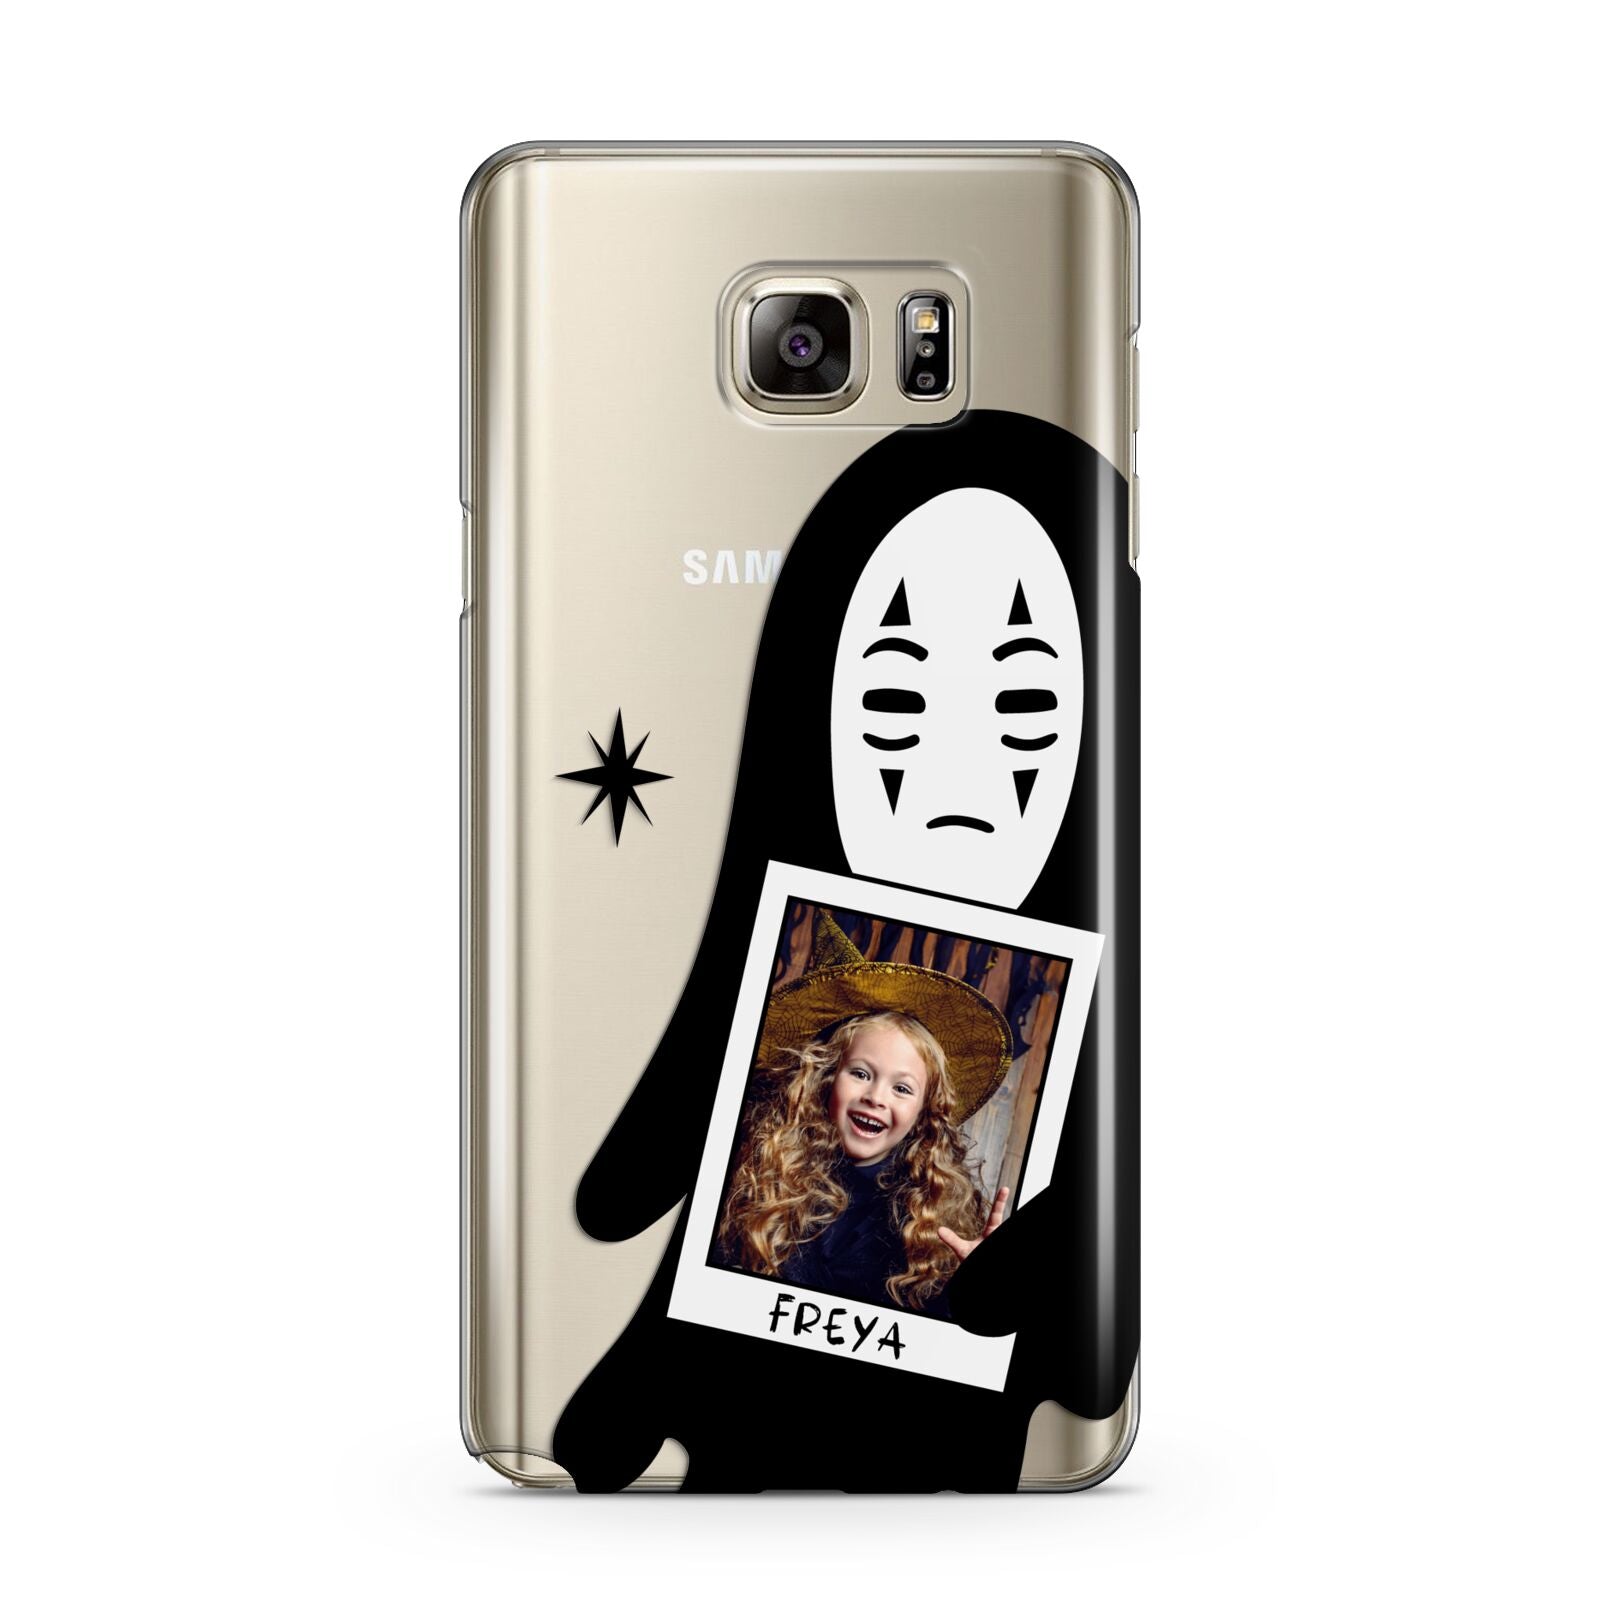 Ghostly Halloween Photo Samsung Galaxy Note 5 Case